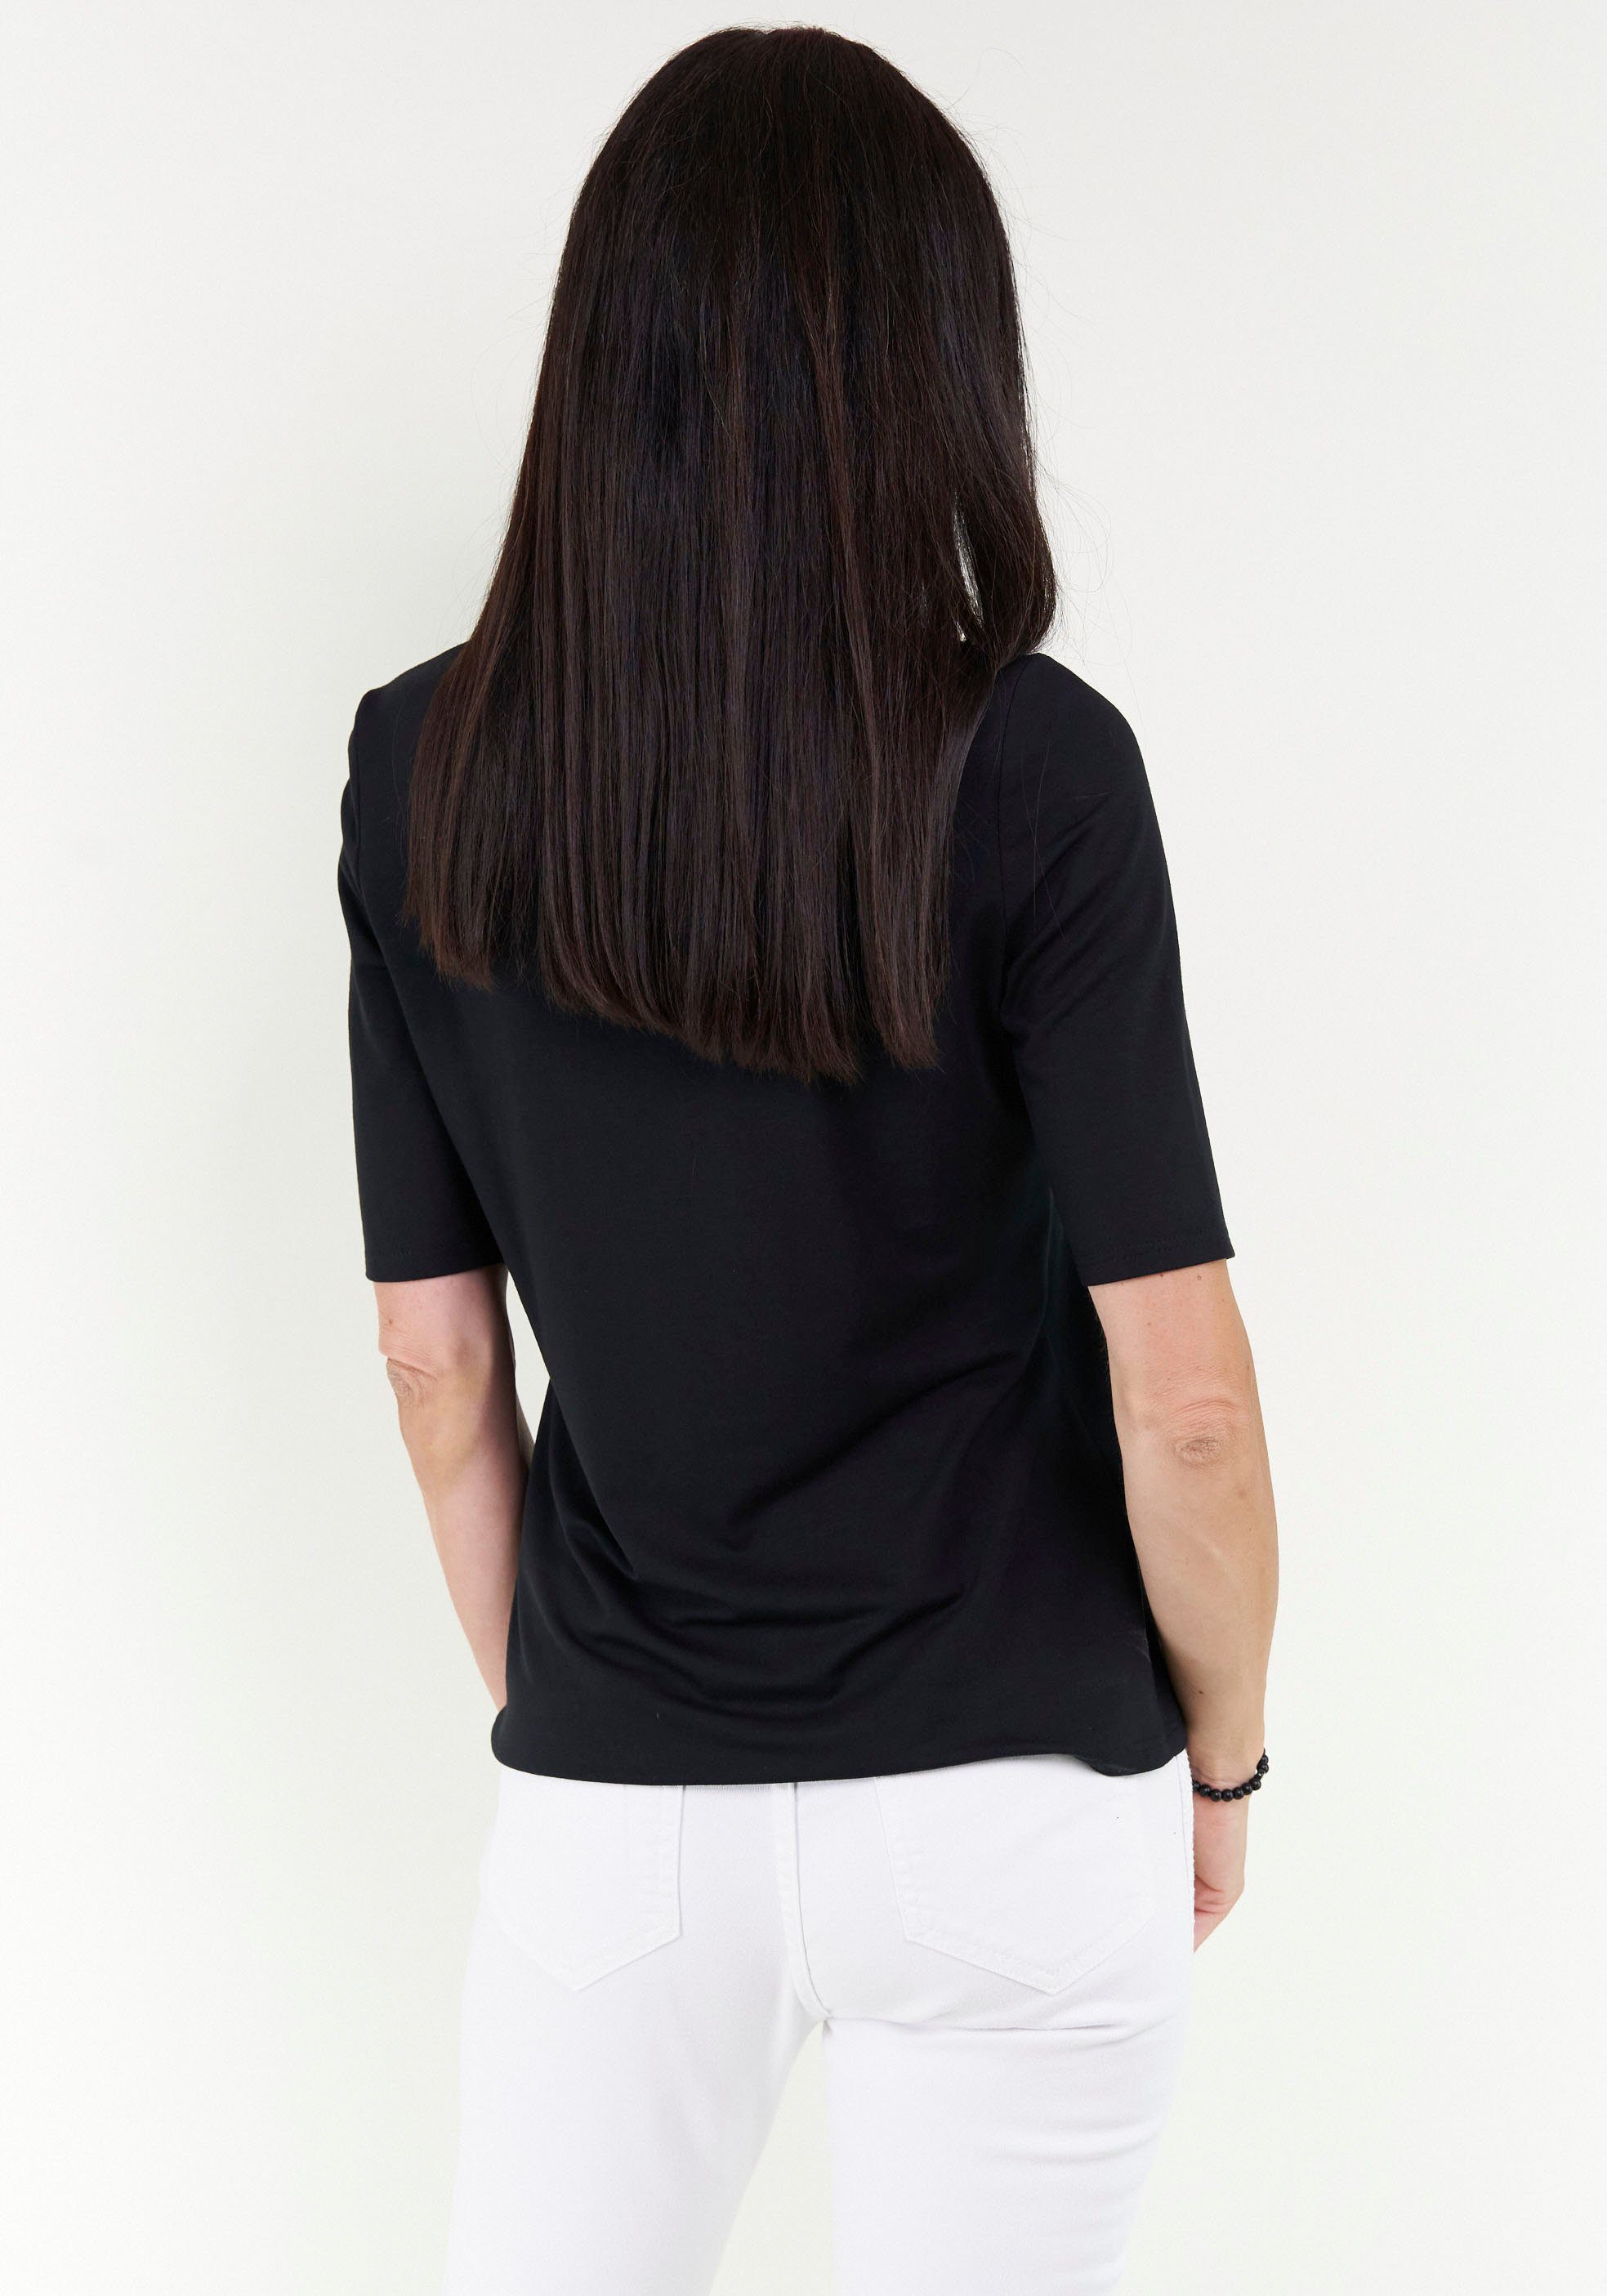 Seidel Moden V-Shirt mit Halbarm aus schwarz GERMANY Material, softem IN MADE